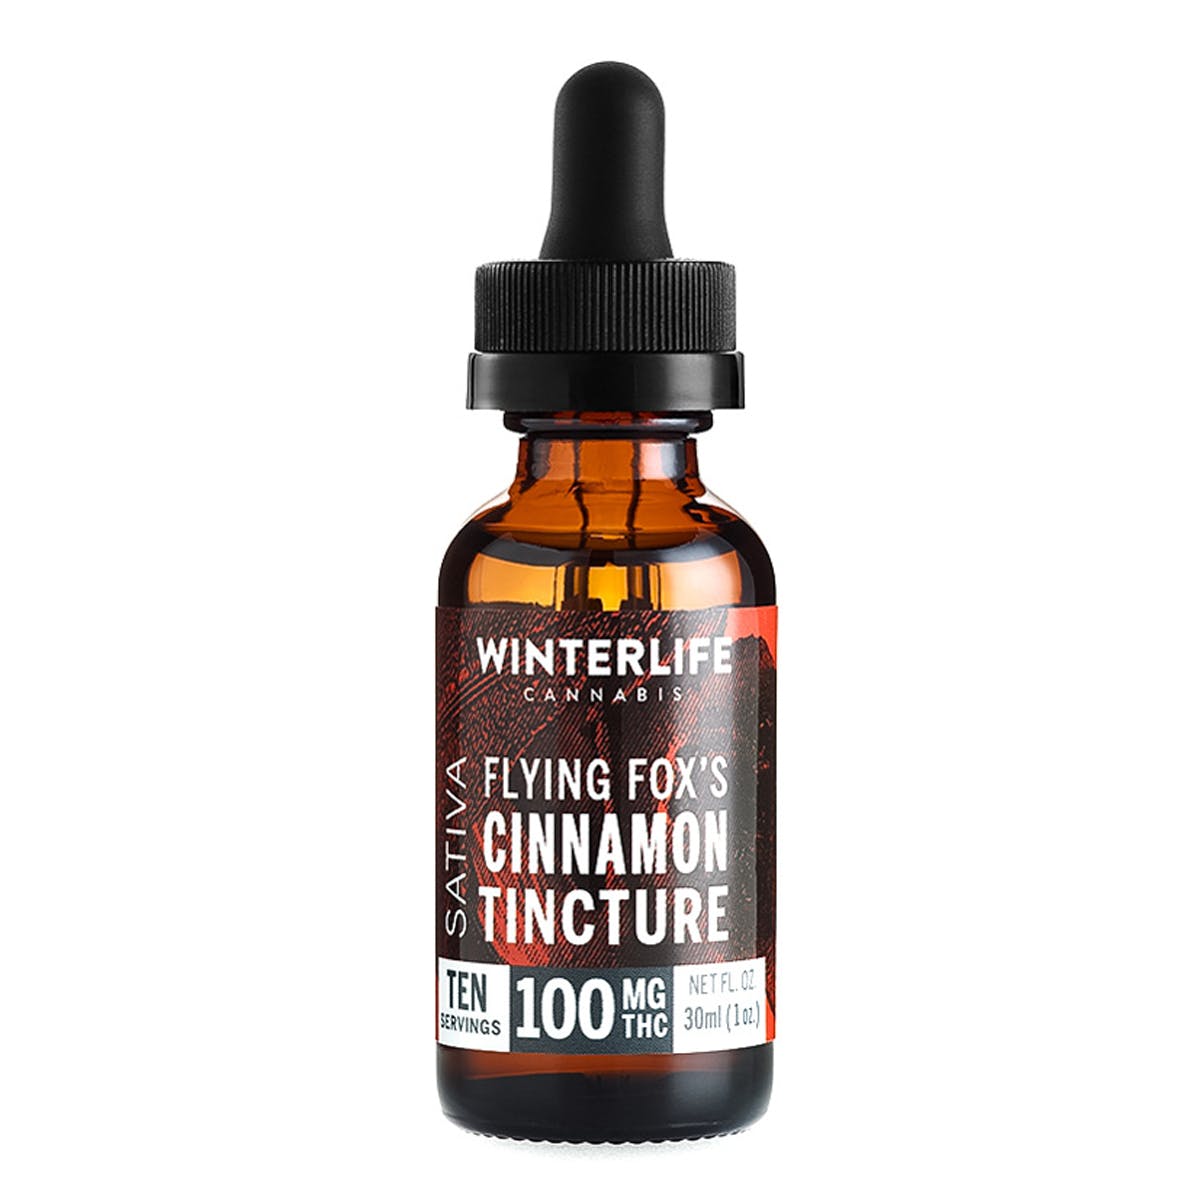 tincture-winterlife-cannabis-flying-foxa-c2-80-c2-99s-cinnamon-tincture-100-mg